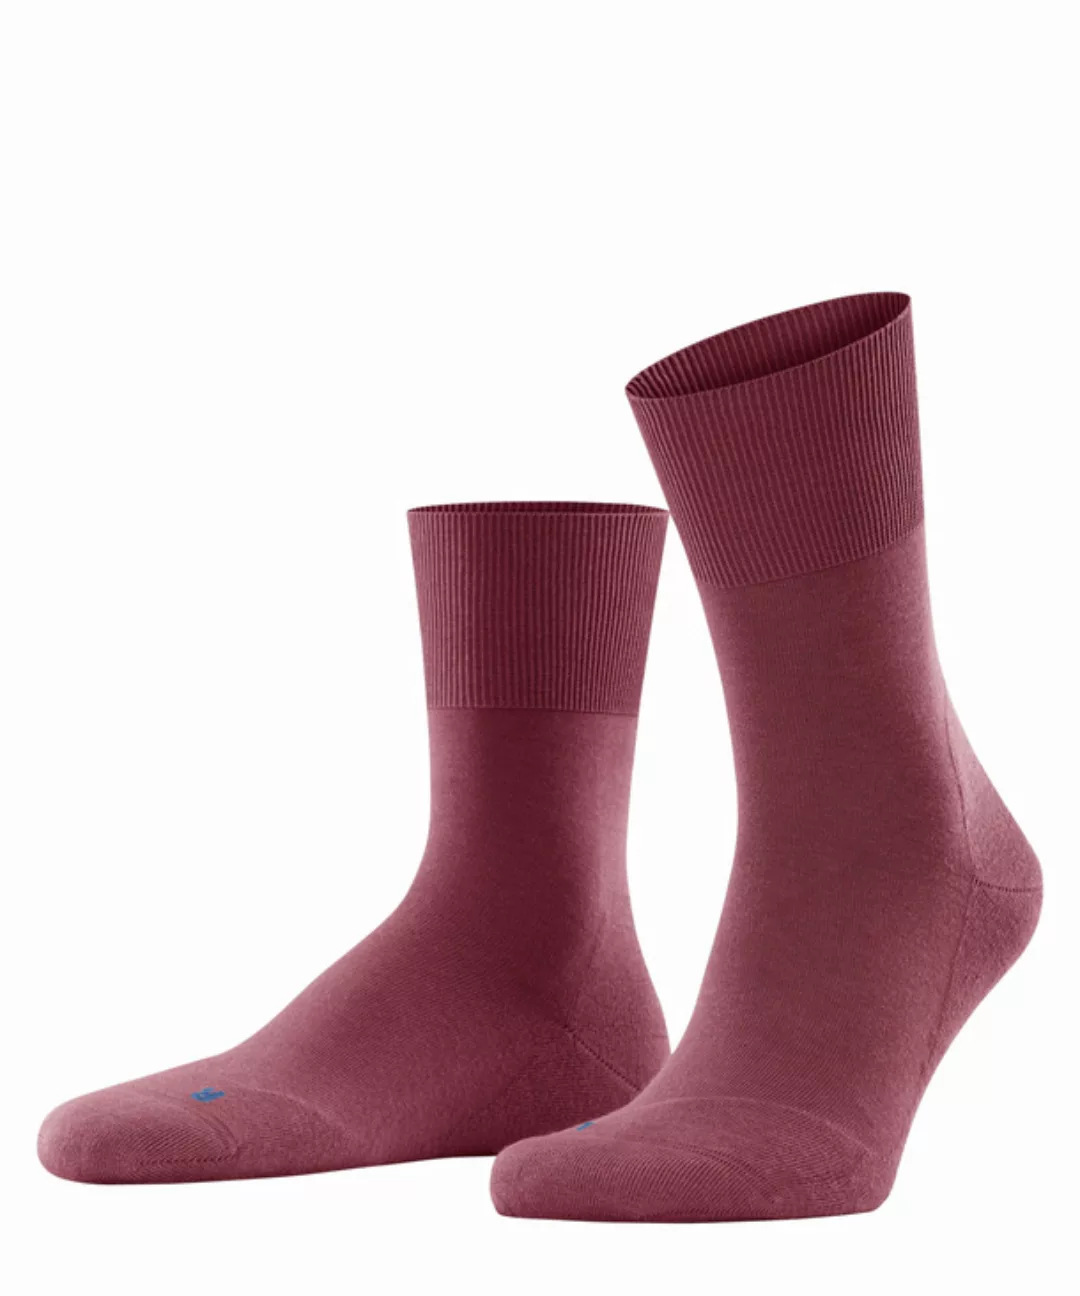 FALKE Run Socken, 44-45, Rot, Uni, Baumwolle, 16605-841304 günstig online kaufen